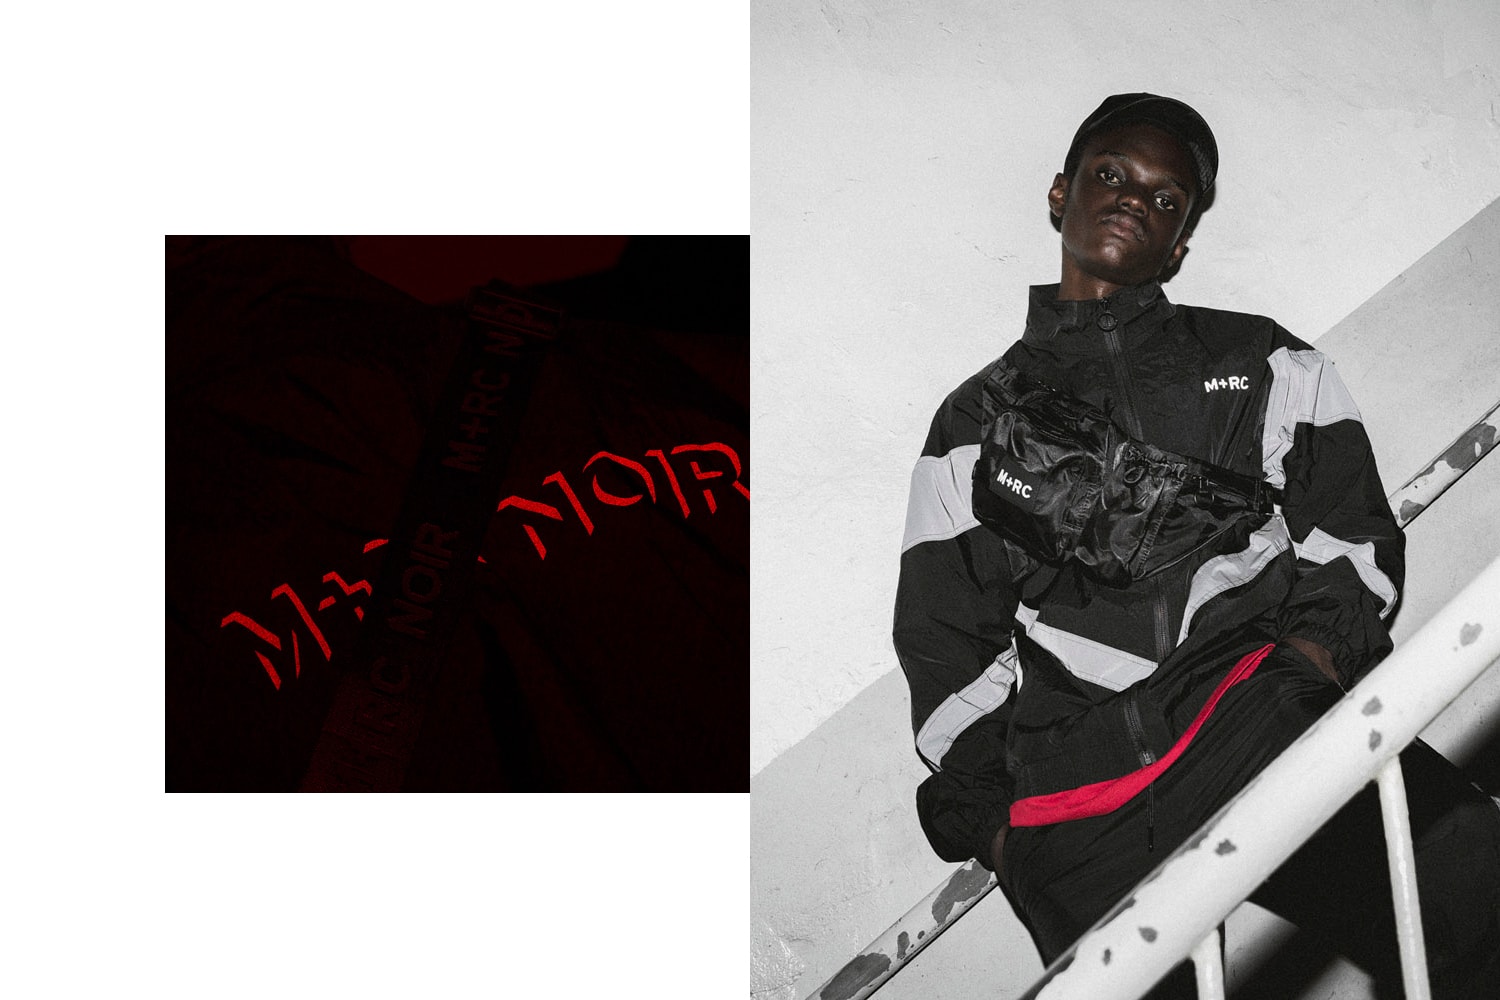 M+RC Noir Spring/Summer 2018 Editorial Drop Online Release HBX lookbook tracksuits hoodies staples basics streetwear